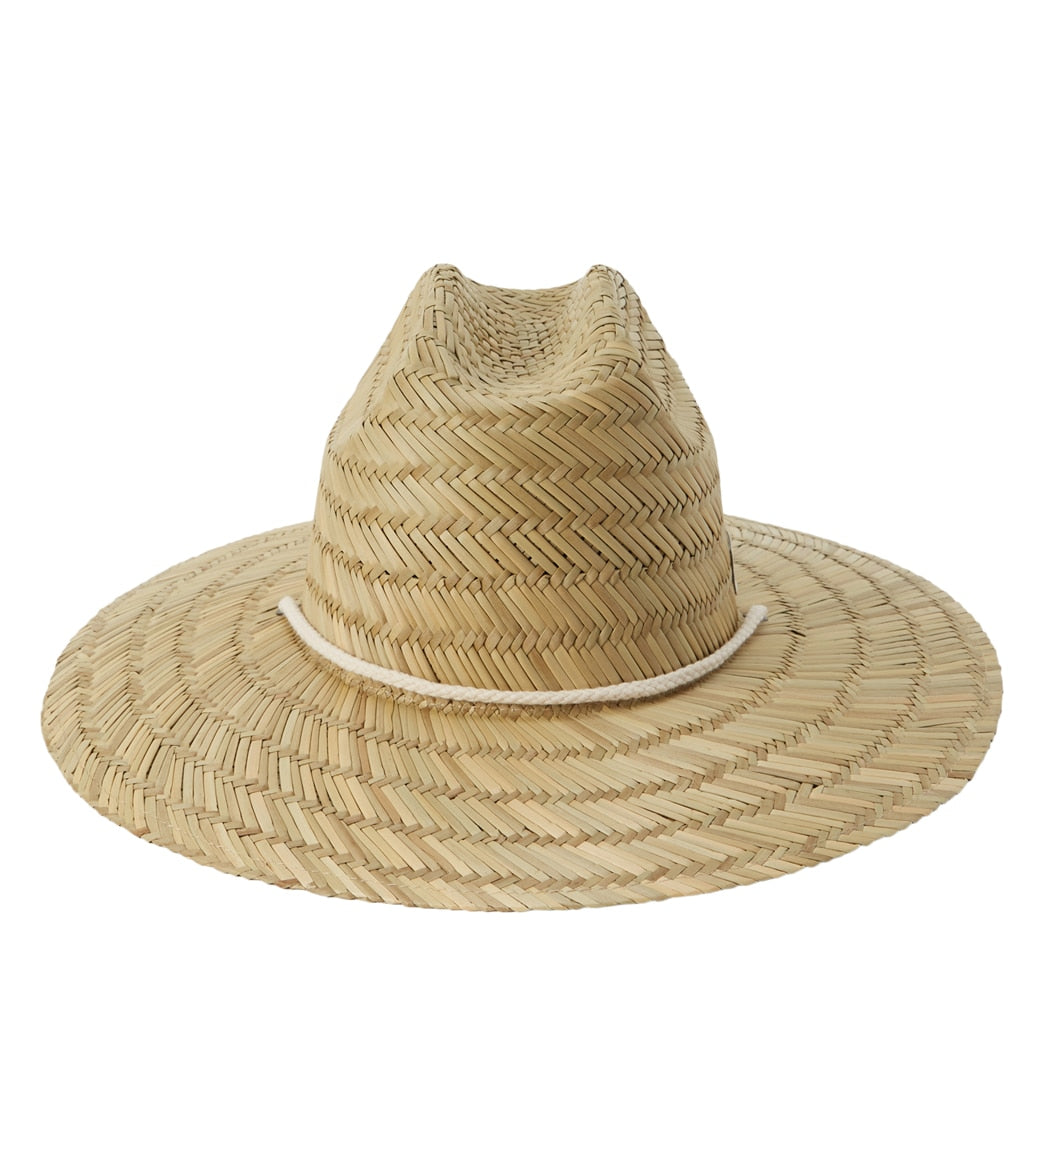 Billabong Women's New Comer Straw Hat at SwimOutlet.com